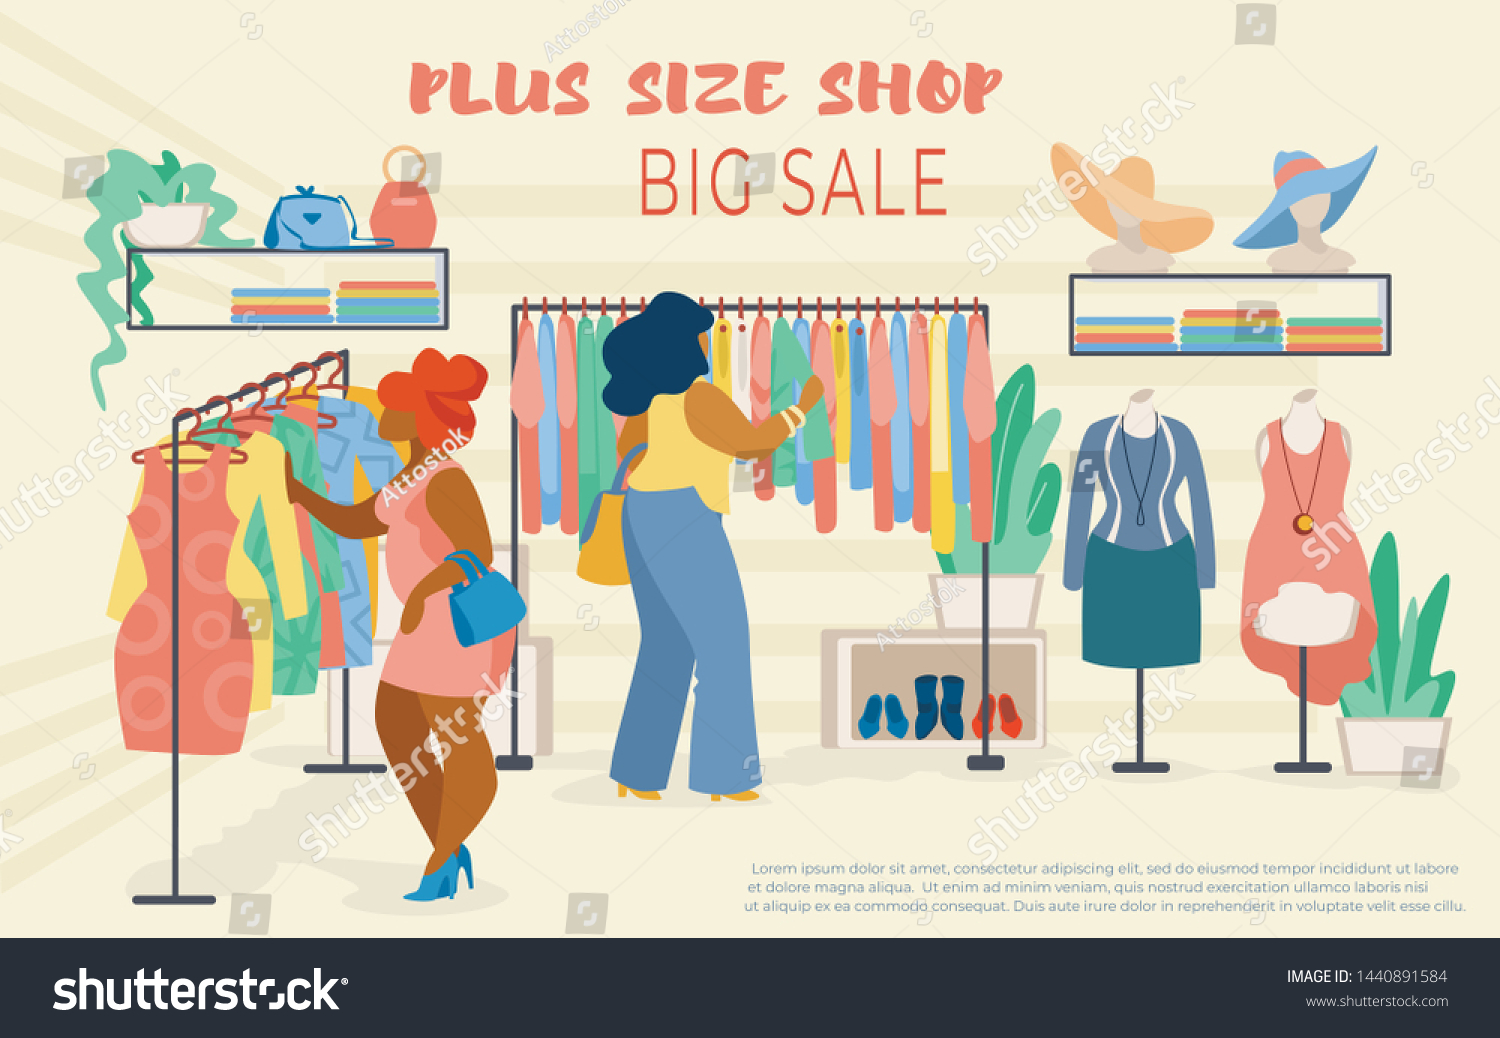 plus size womens clothing sale